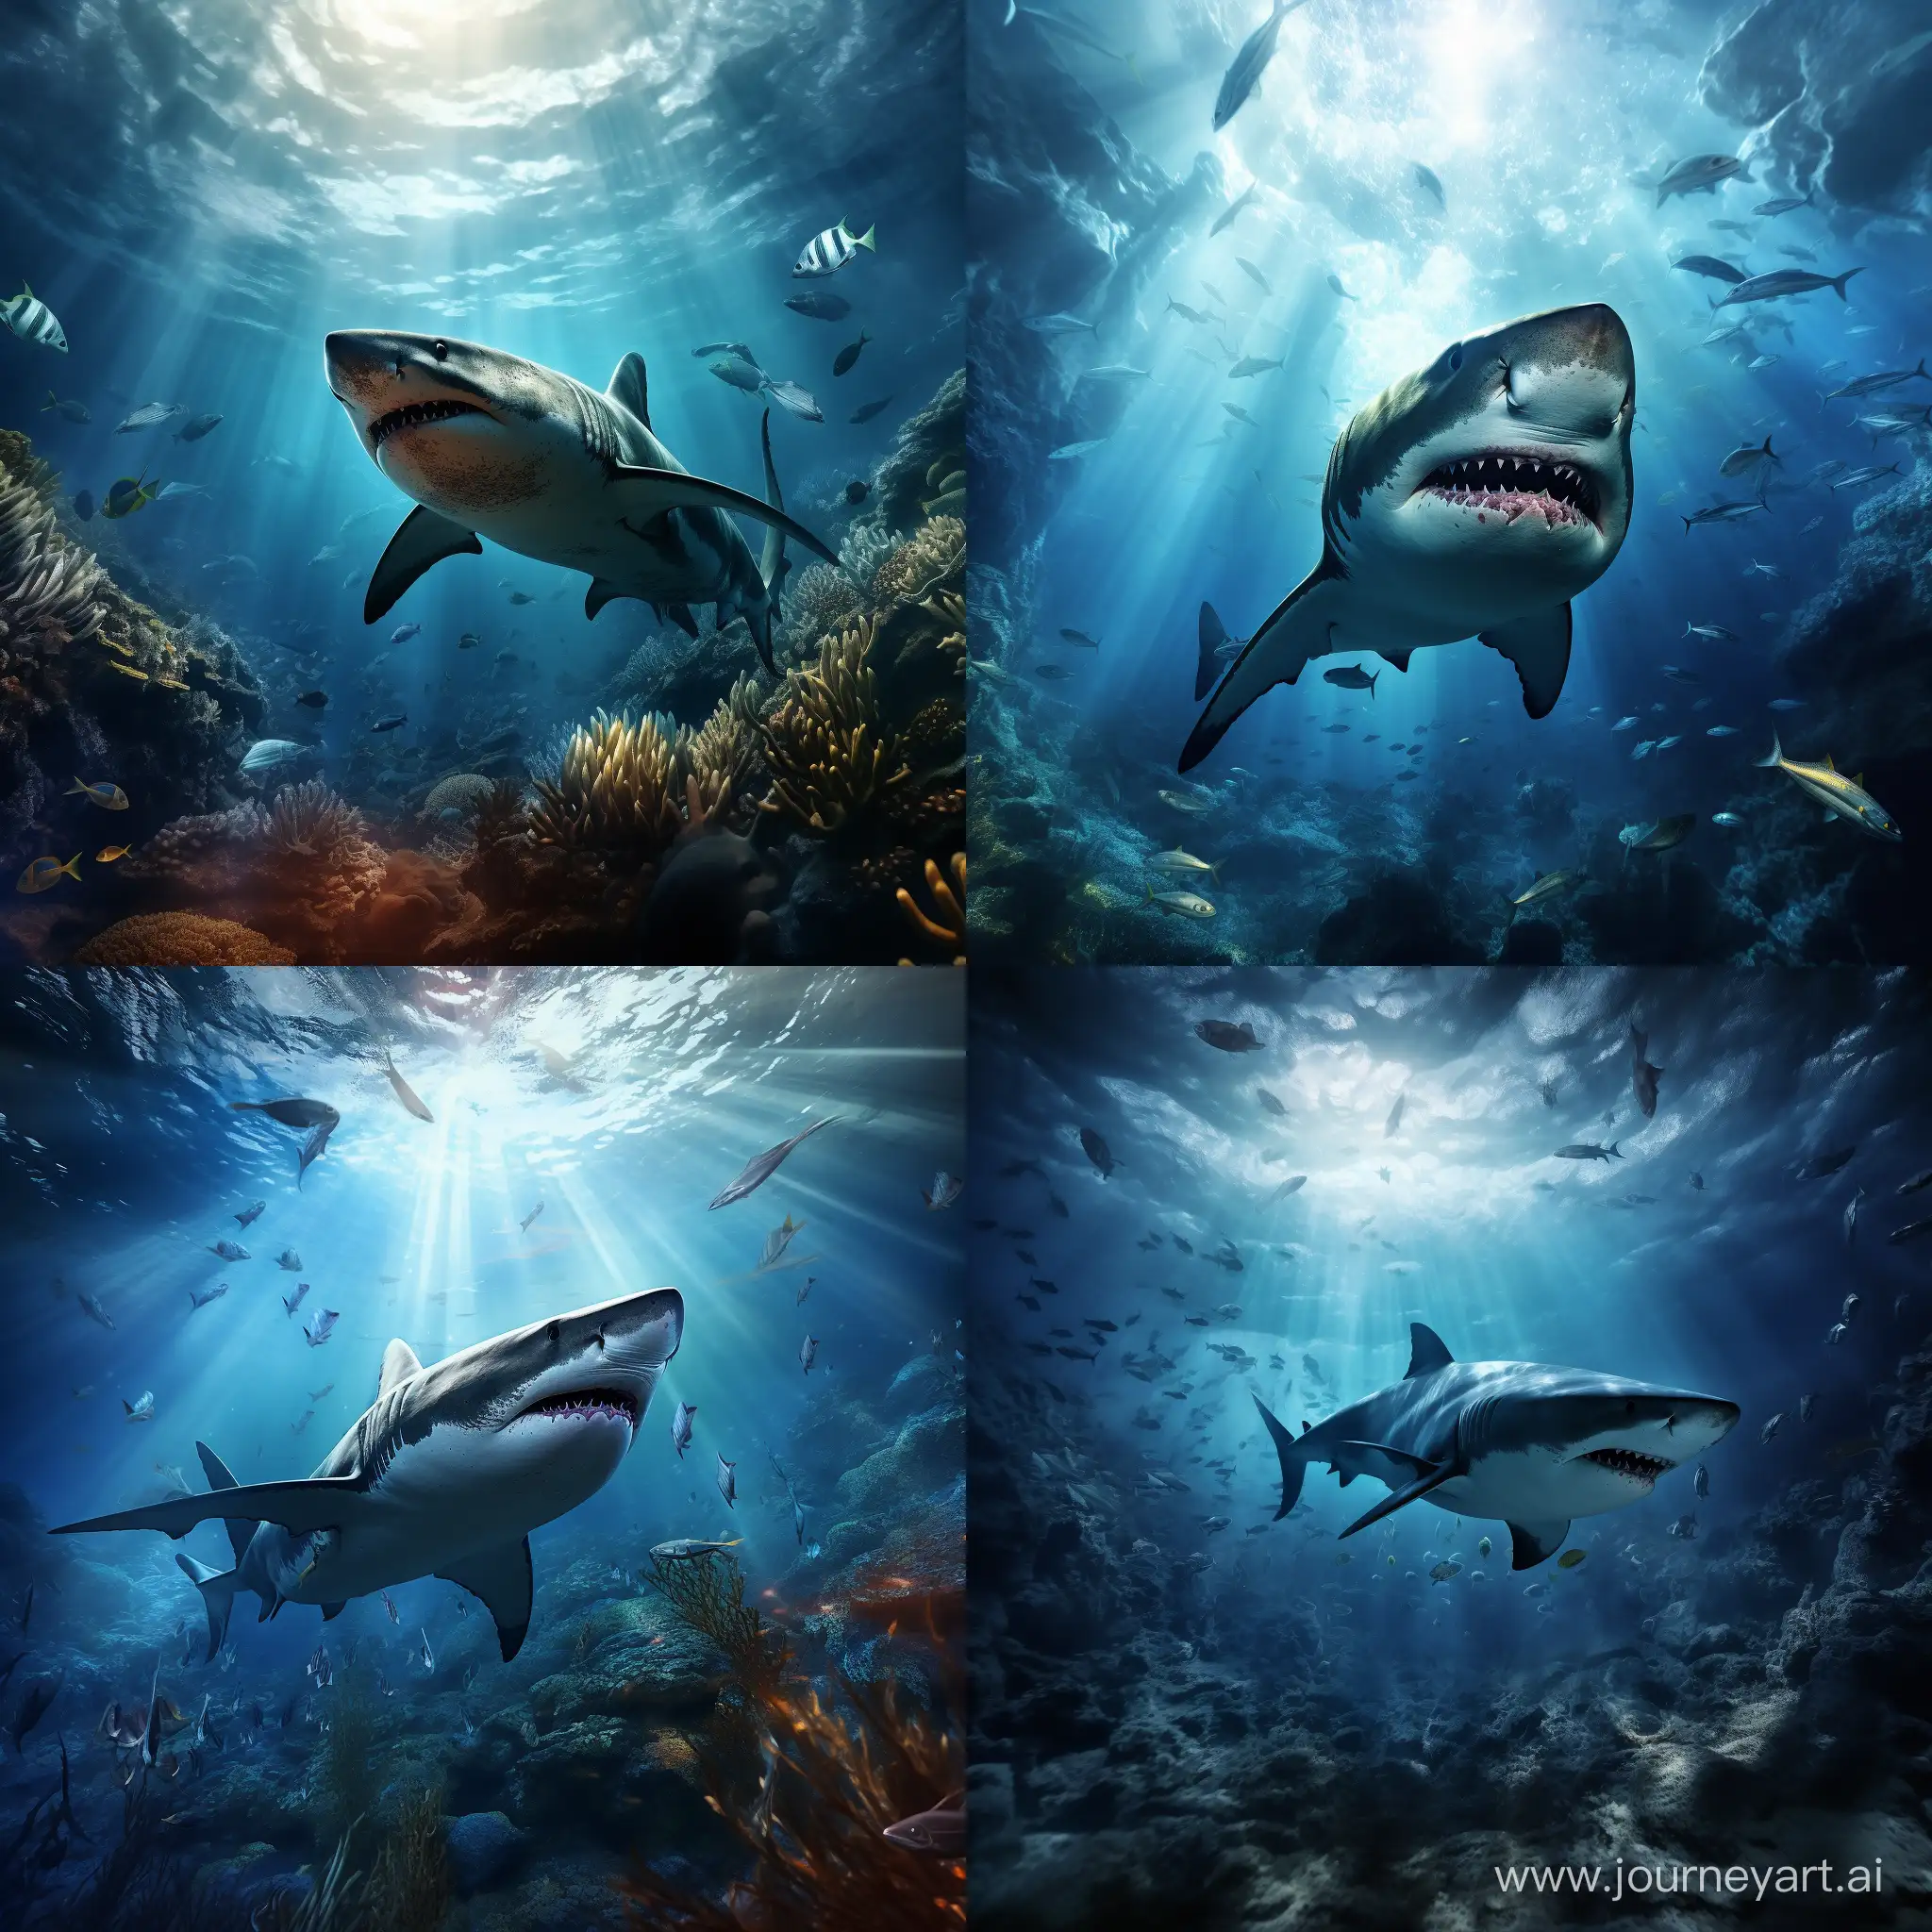 Majestic-Shark-in-Ocean-Depths-Photorealistic-HDR-8K-Masterpiece